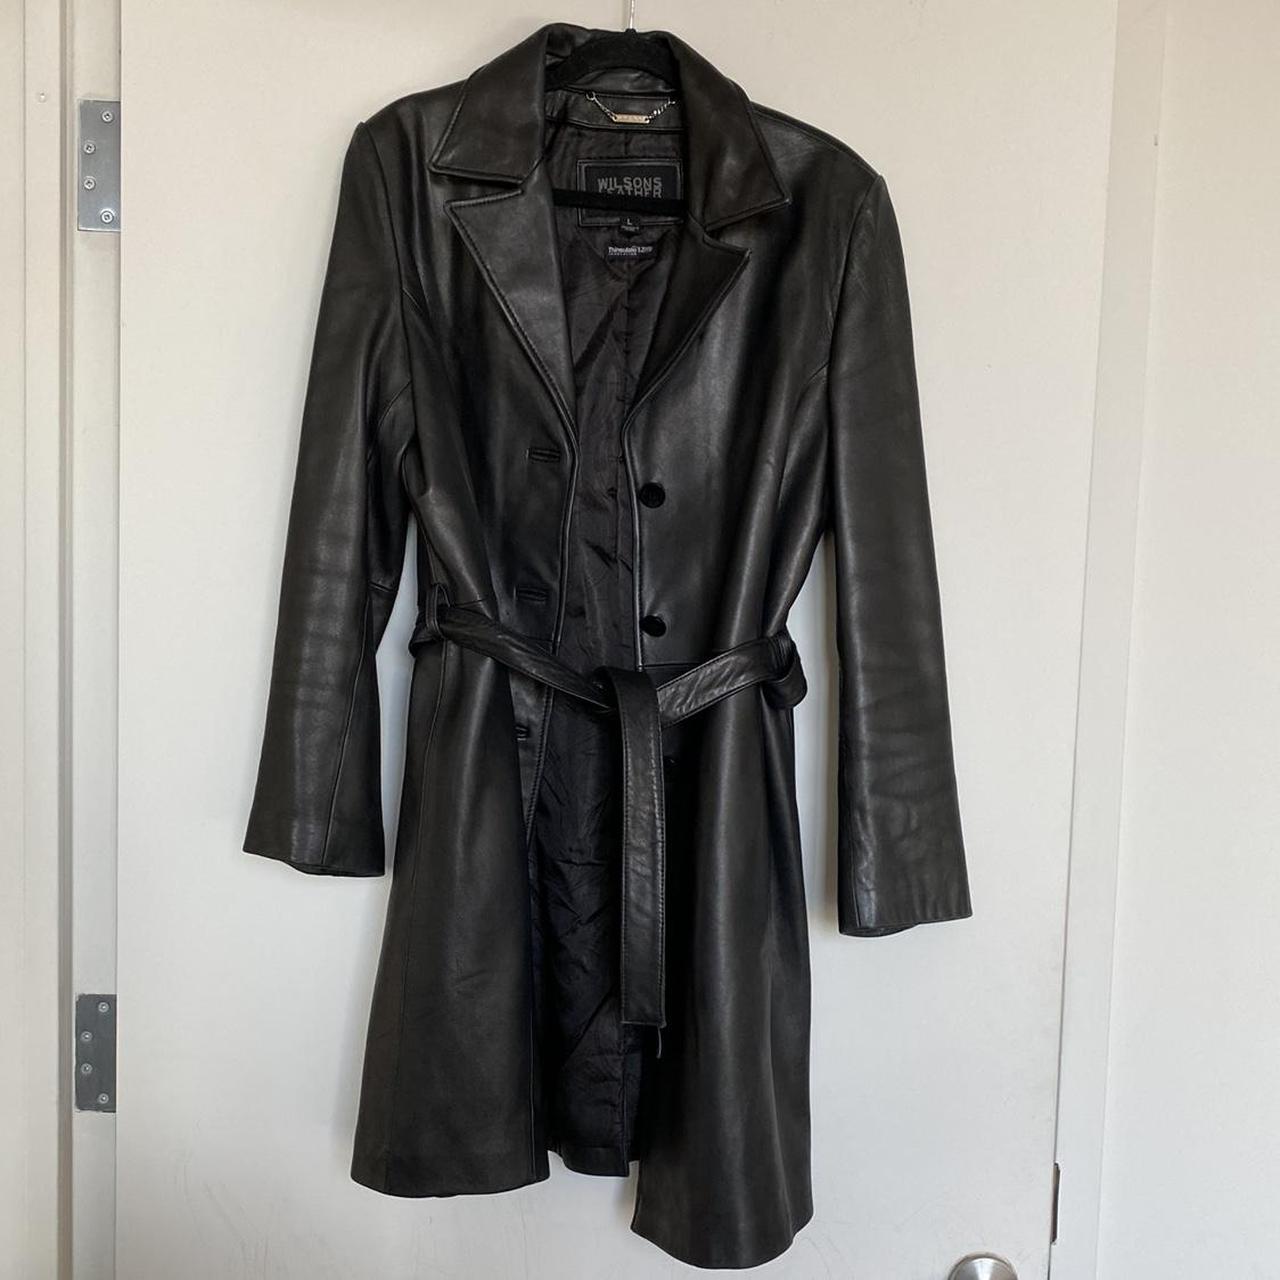 Vintage Wilson Leather Jacket 90’s trench - Depop